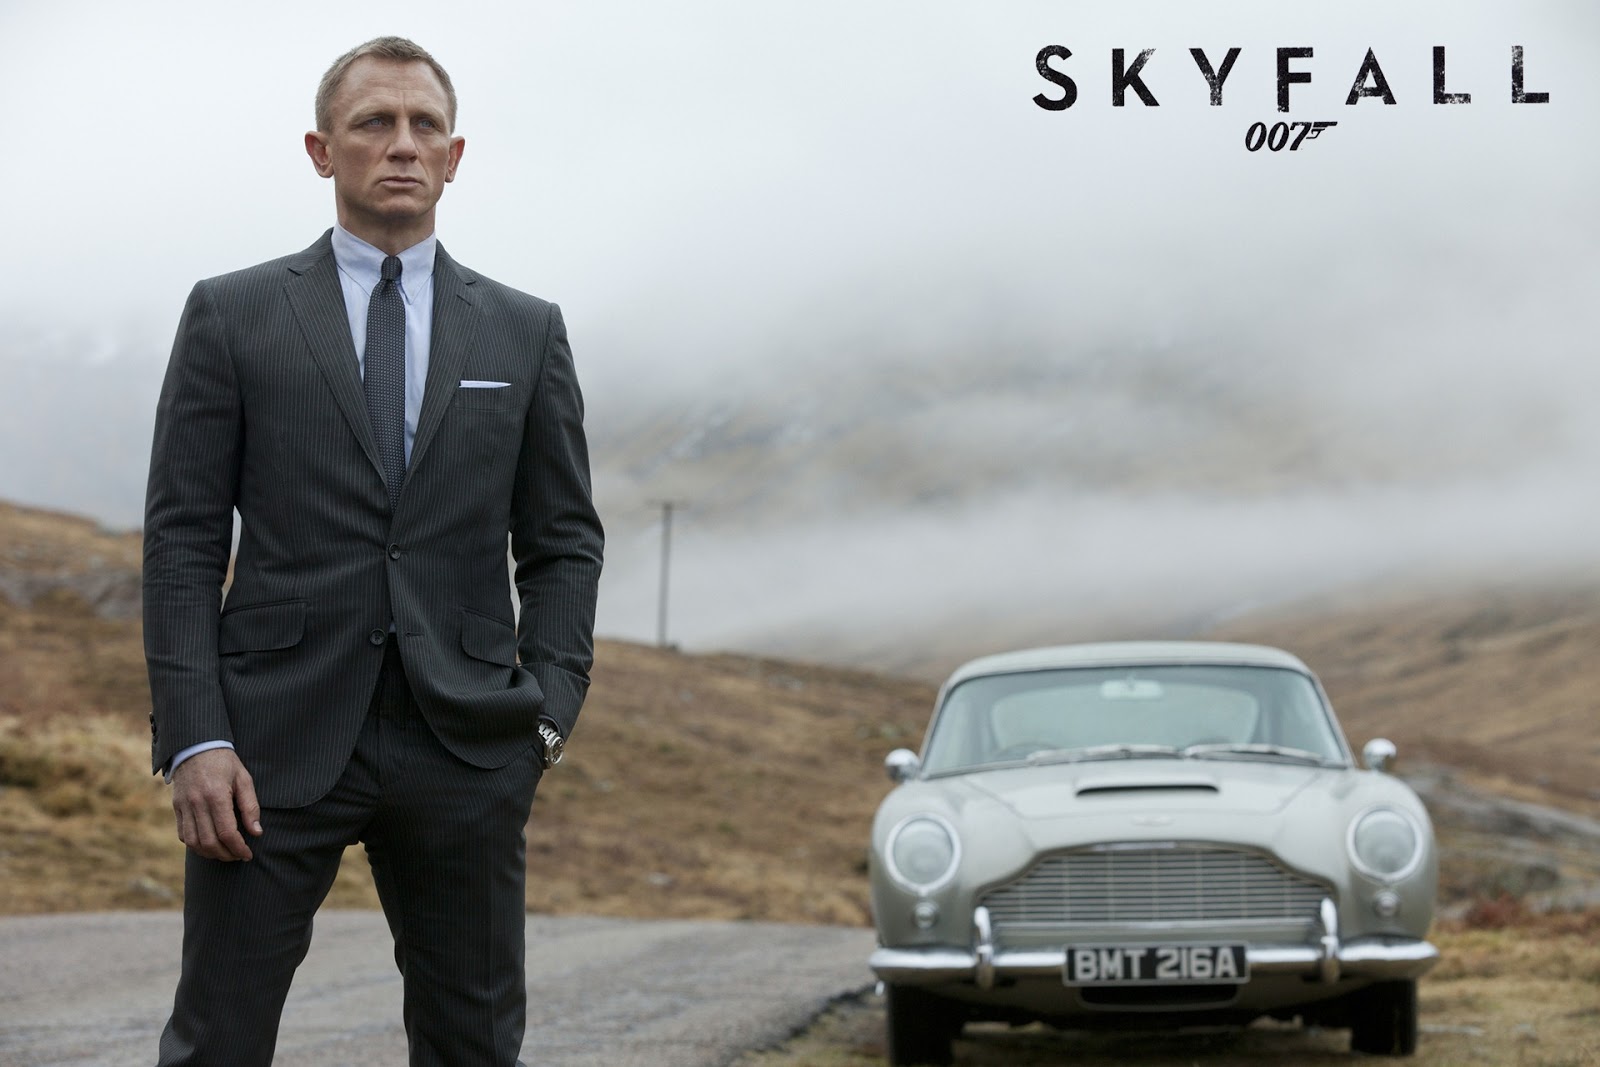 James Bond Skyfall HD Wallpaper For iPhone